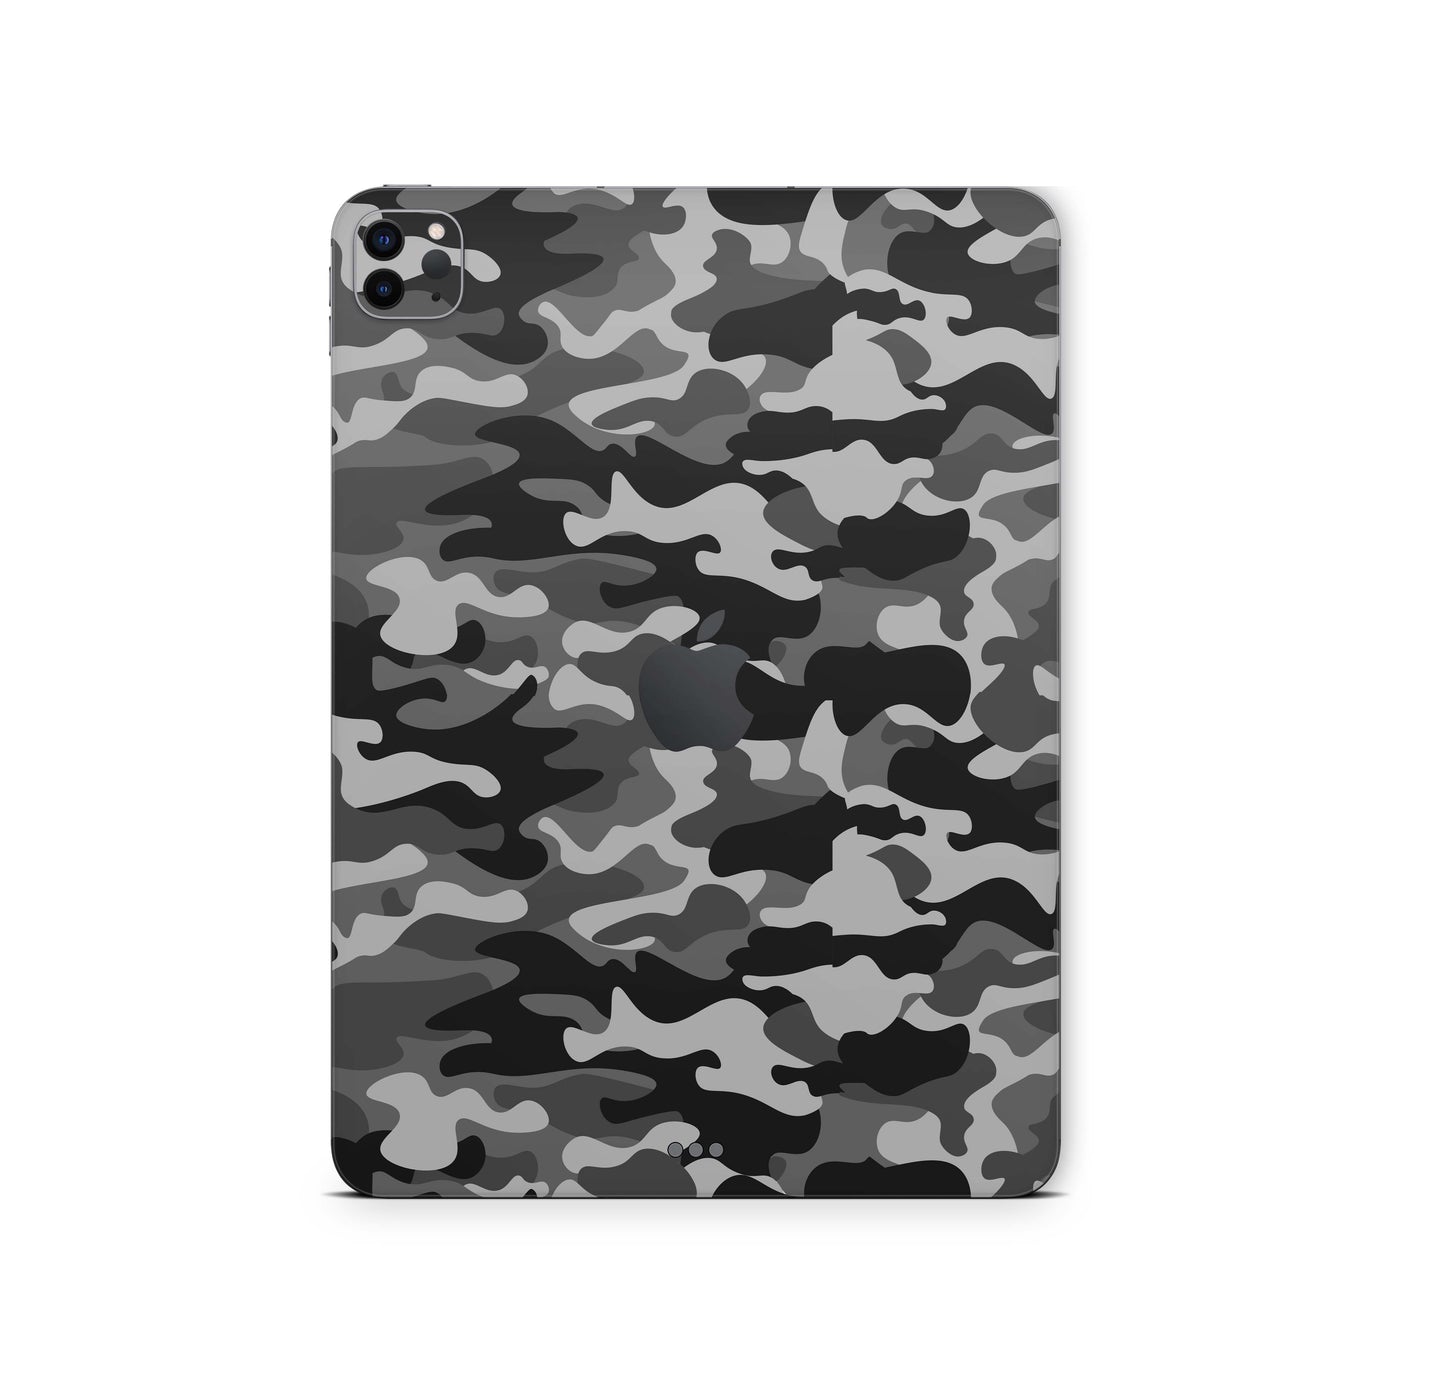 iPad Pro Skin 12,9 3.Generation Design Cover Folie Vinyl Skins & Wraps Aufkleber Skins4u Urban-Camo  